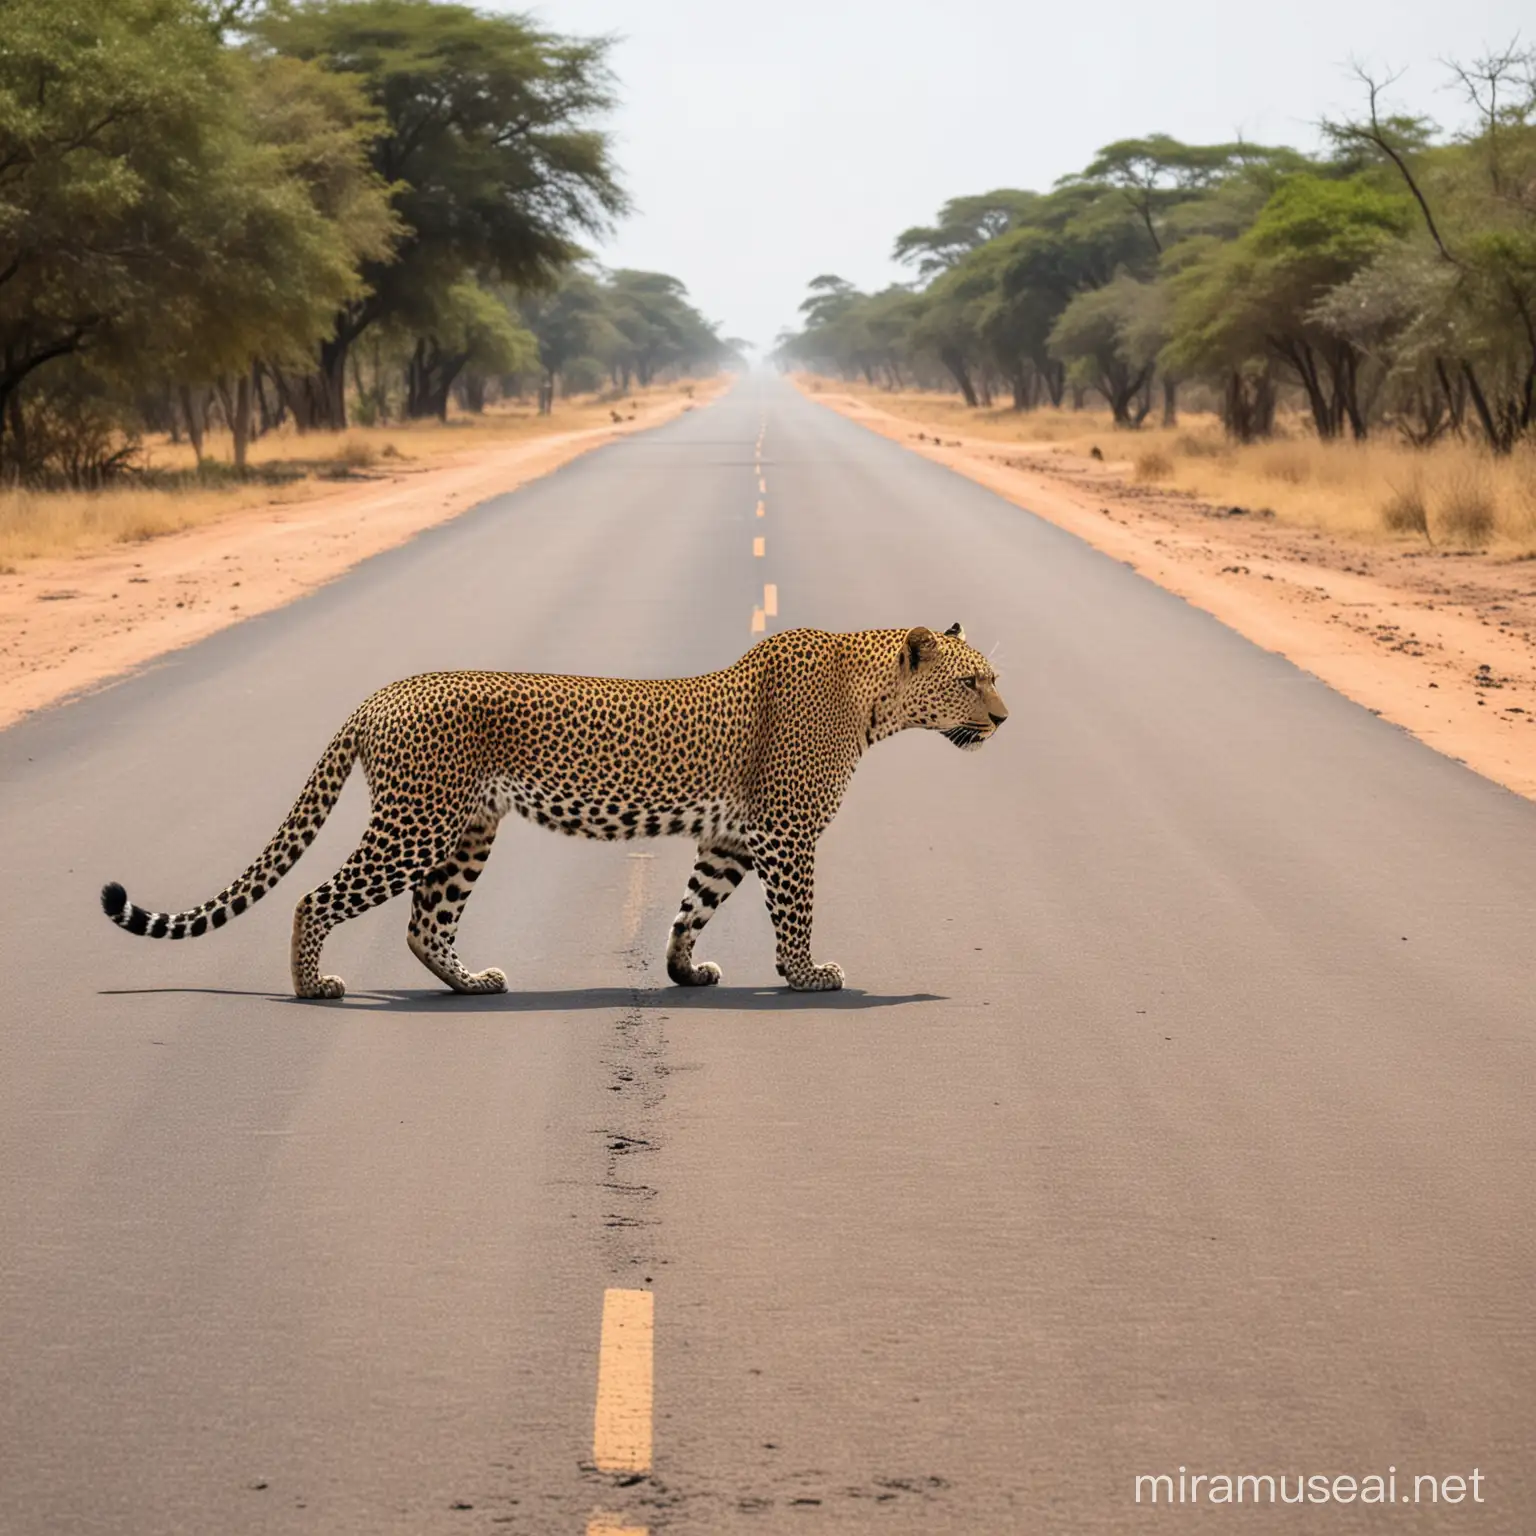 Leopard Crossing Tar Road in Natural Landscape